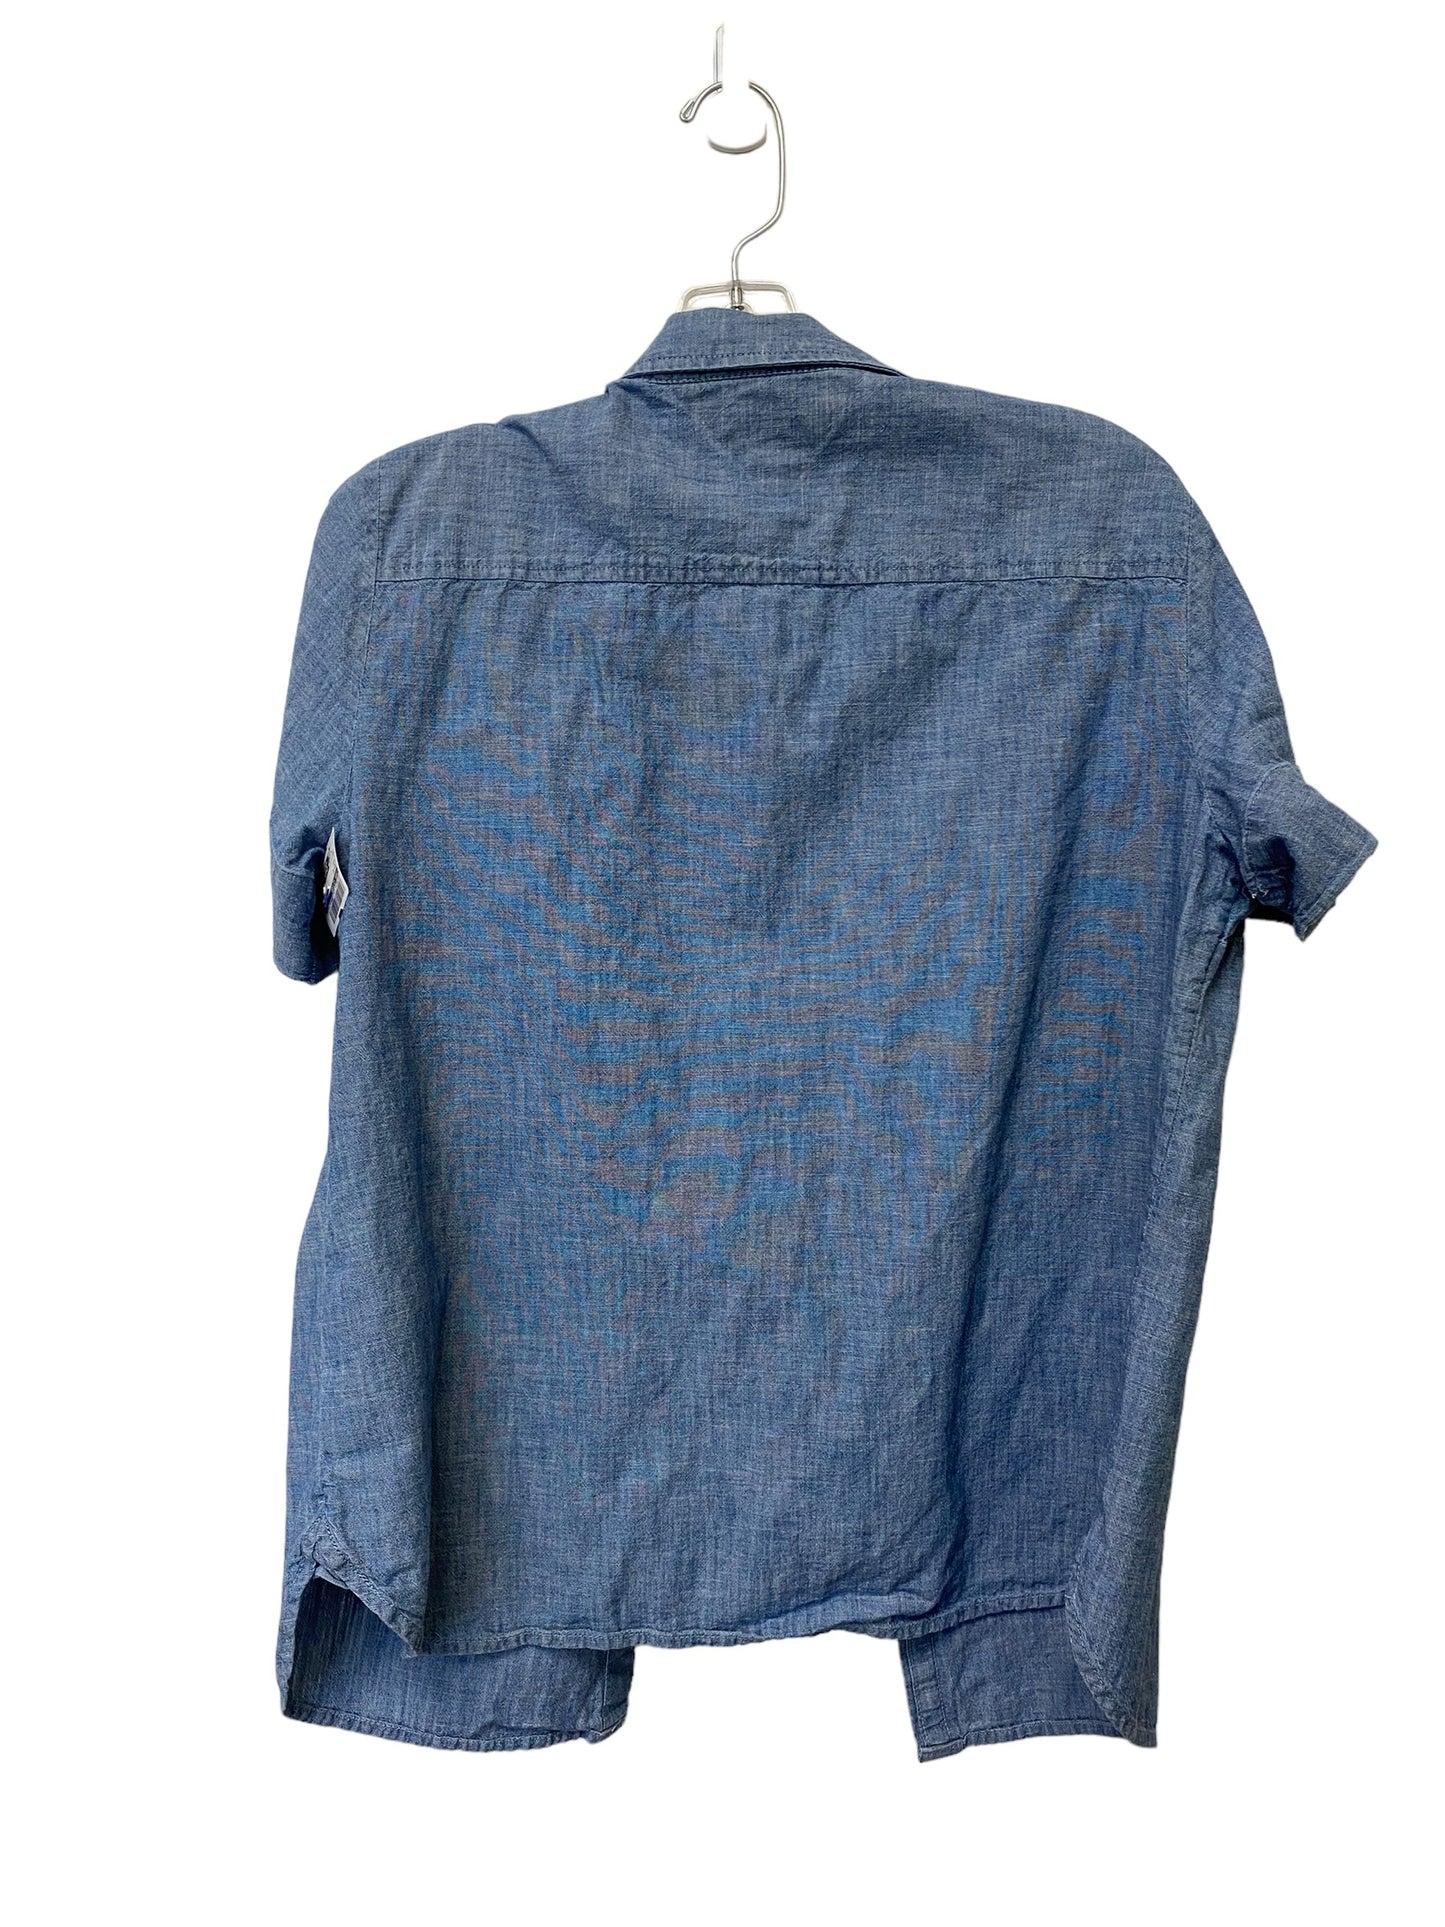 Blue Top Short Sleeve Tommy Hilfiger, Size L